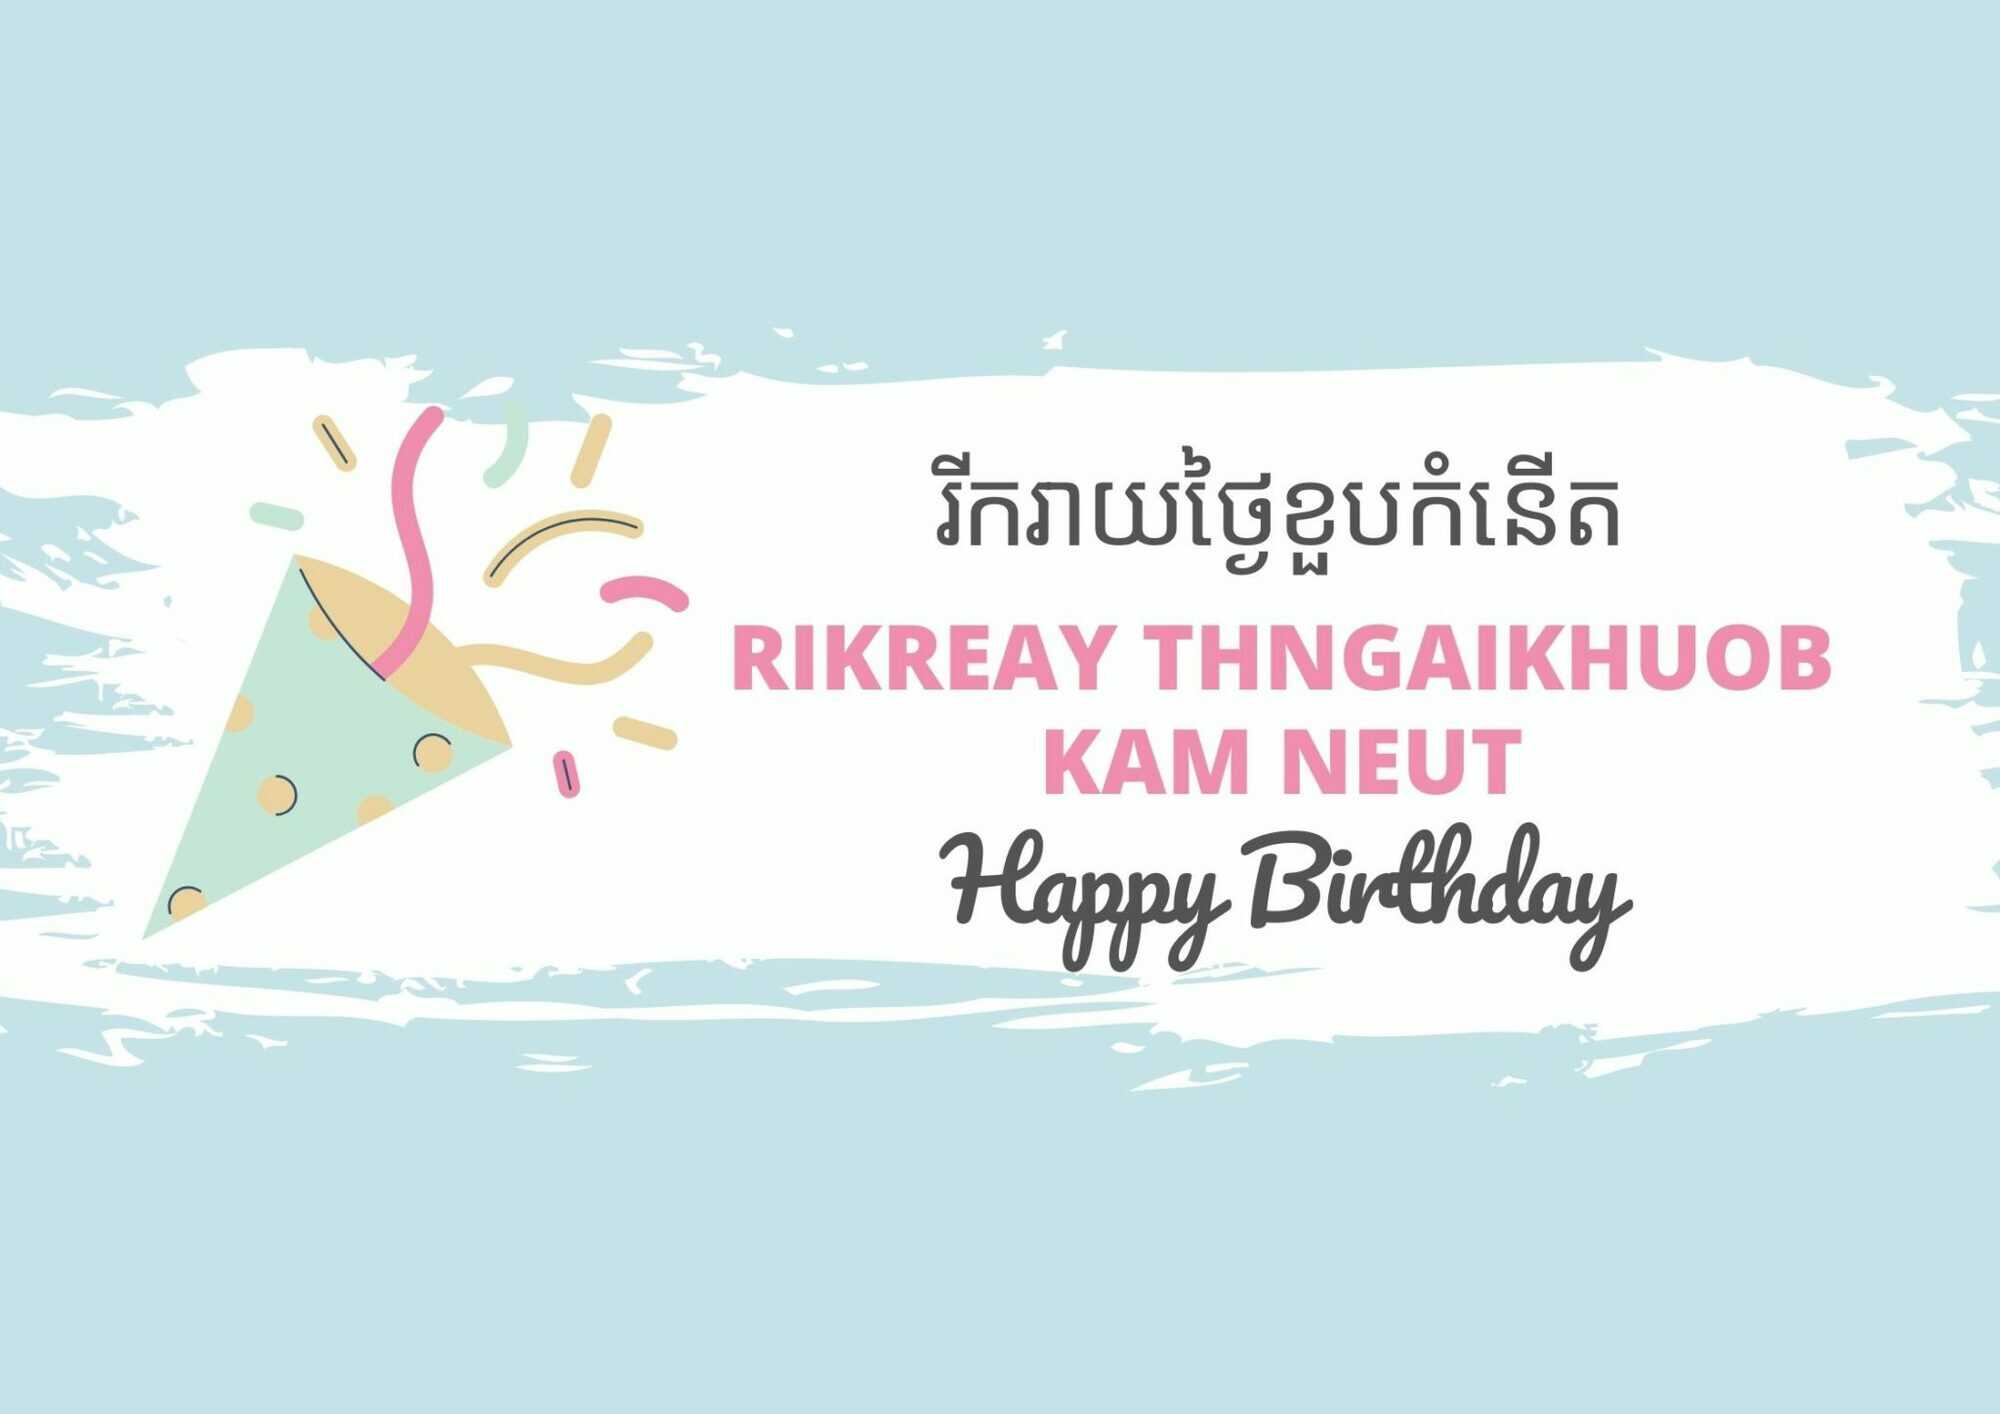 3 Ways To Say Happy Birthday In Khmer Language